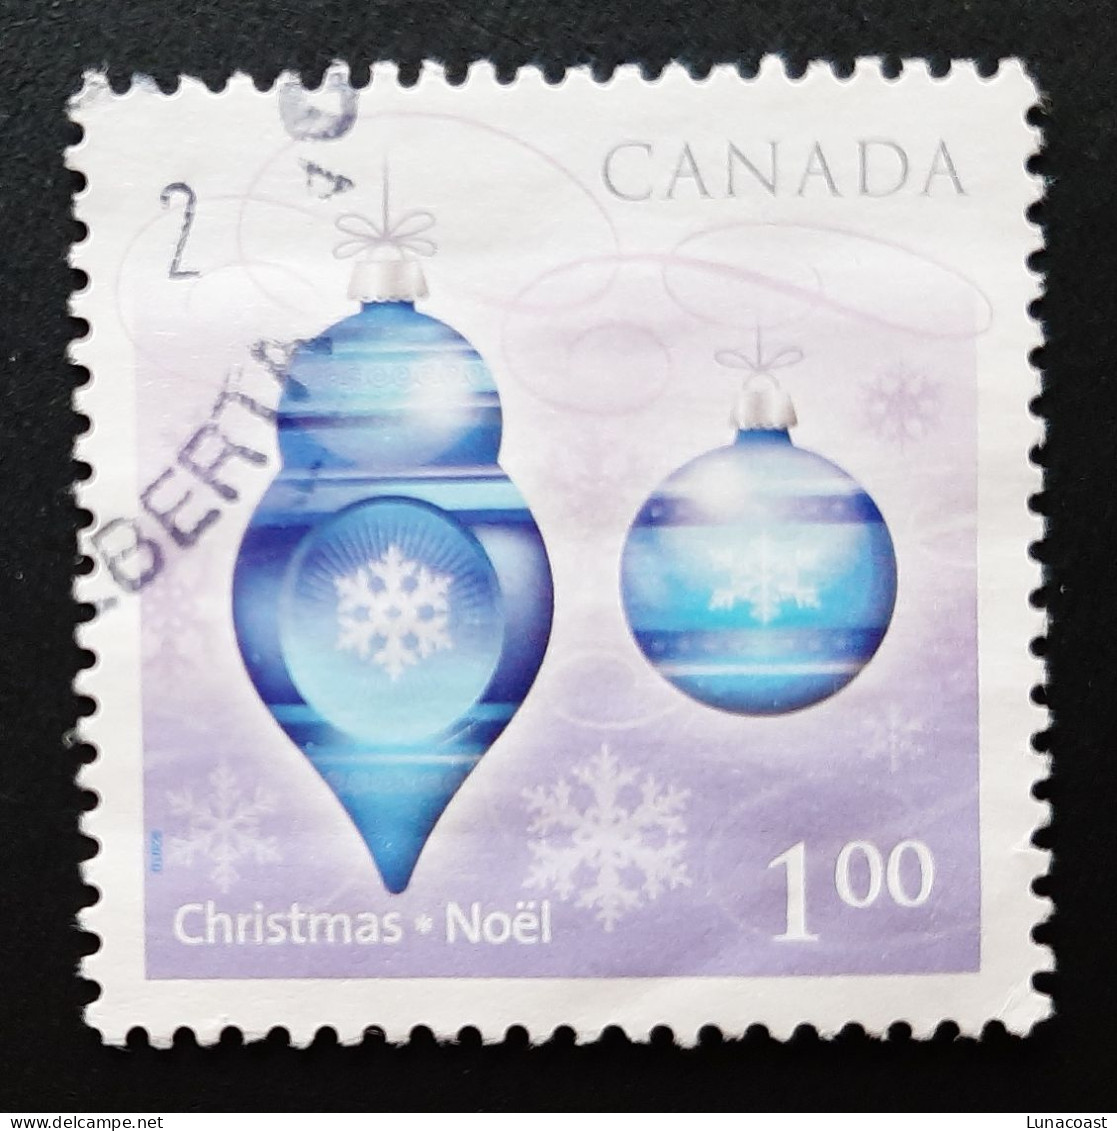 Canada 2010  USED Sc 2411 B   1.00$  Christmas From Souvenir Sheet, Perf.12.5 - Gebruikt